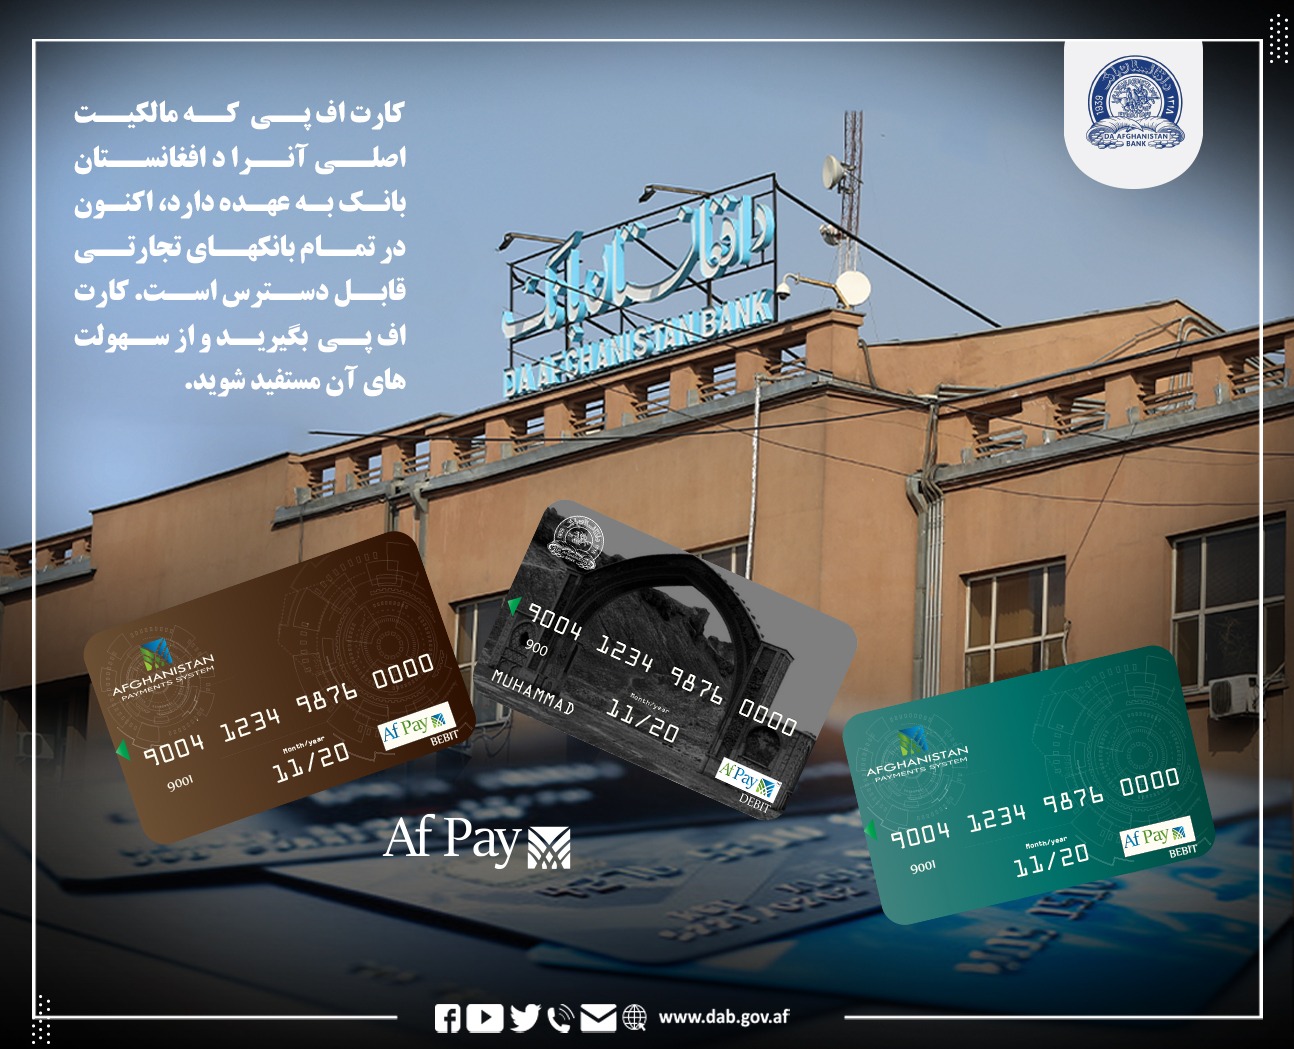 کارت اف پی که مالکیت اصلی آنرا د افغانستان بانک به عهده دارد 